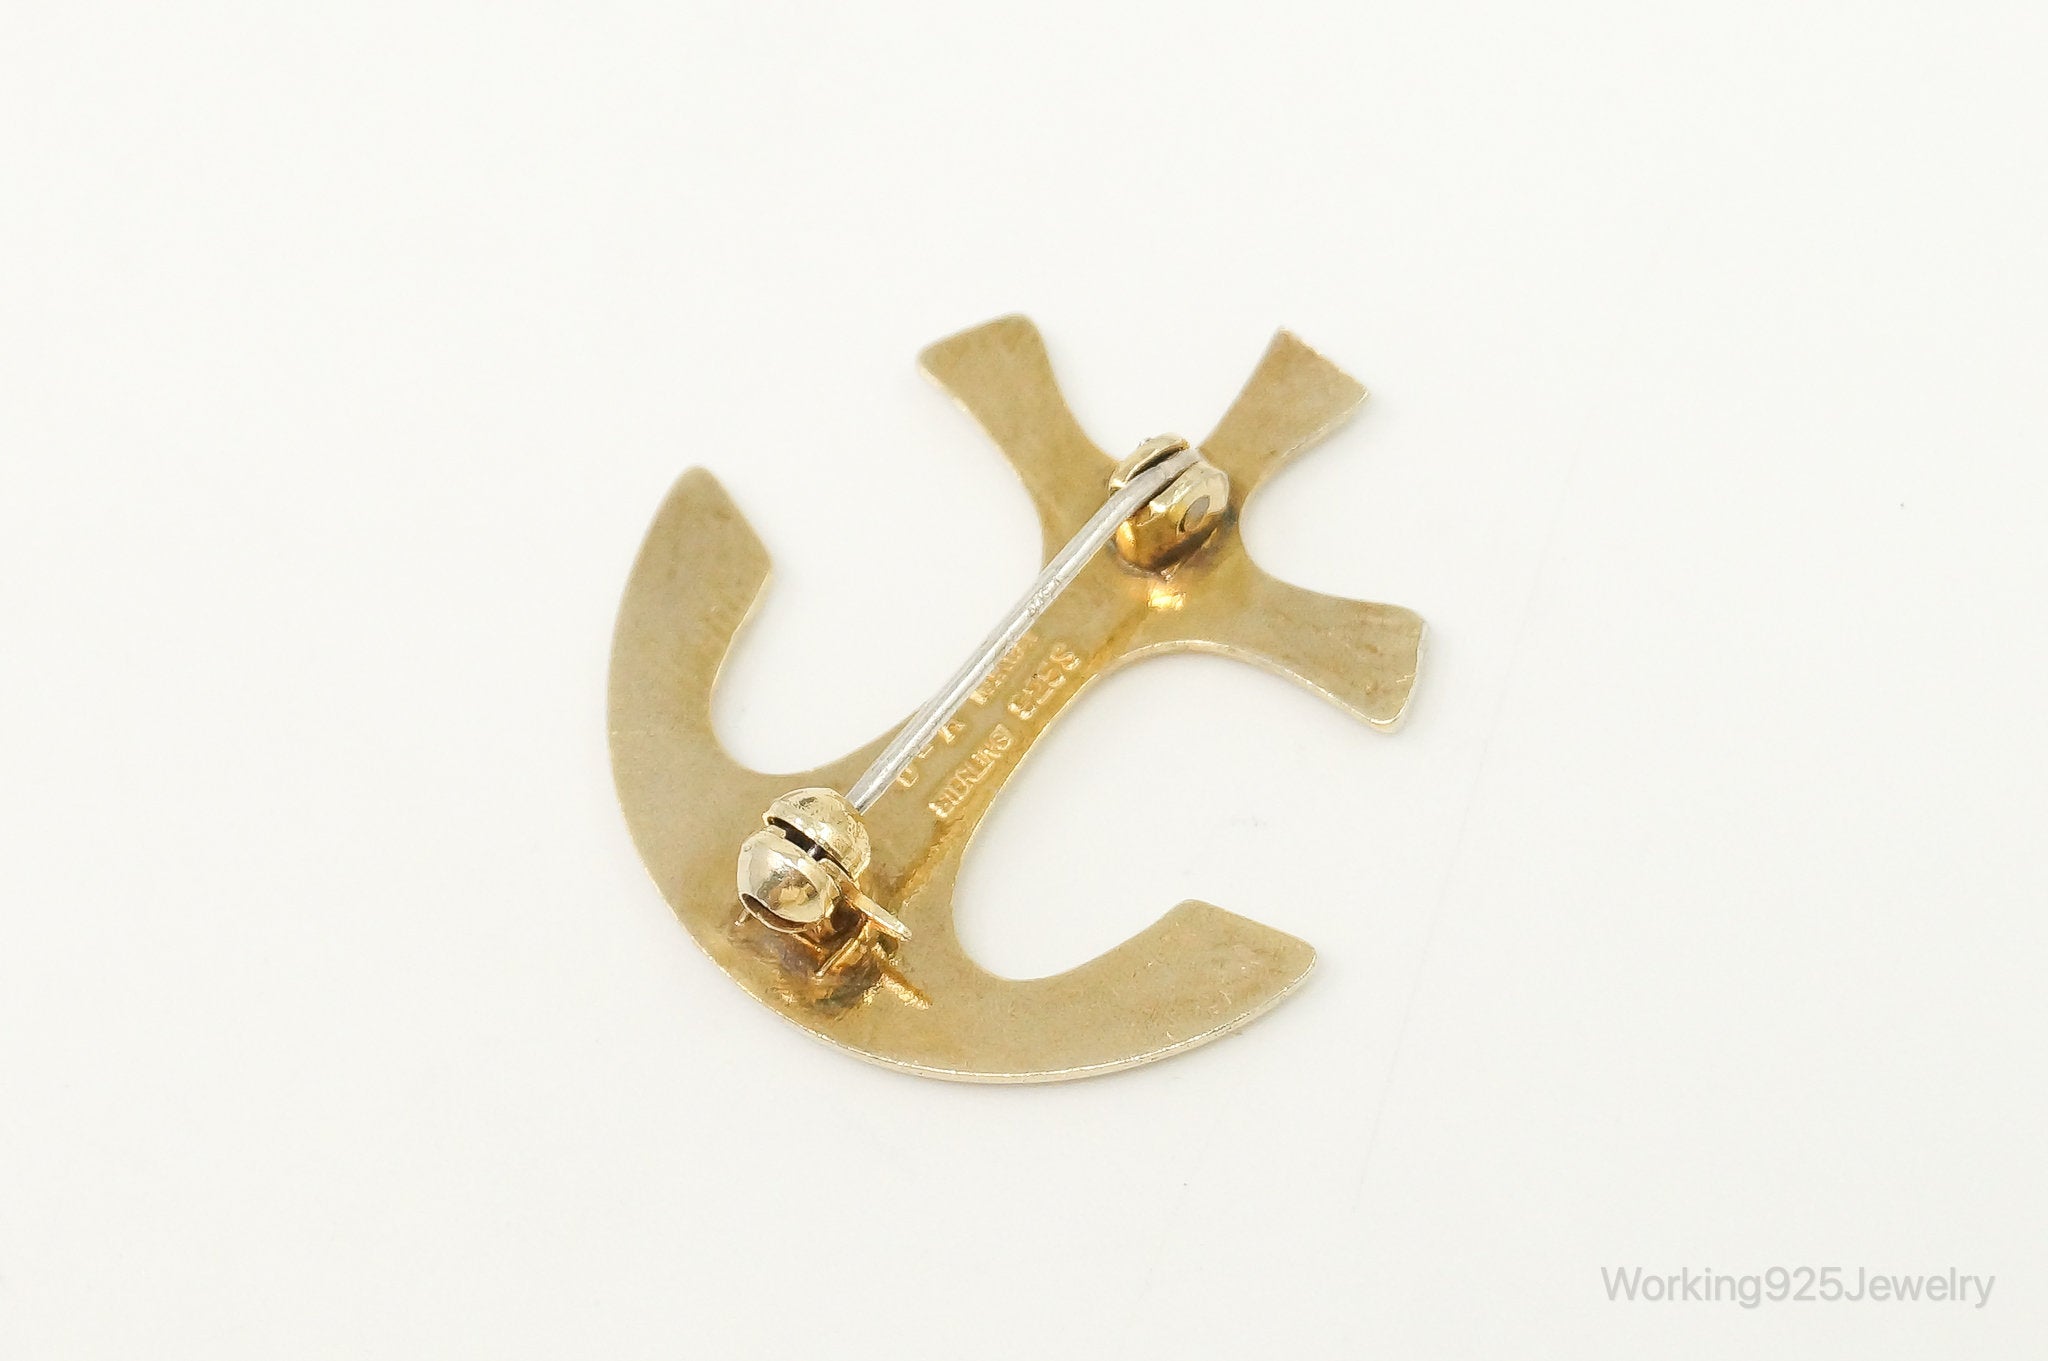 VTG David Andersen White Enamel Gold Vermeil Sterling Silver Anchor Brooch Pin